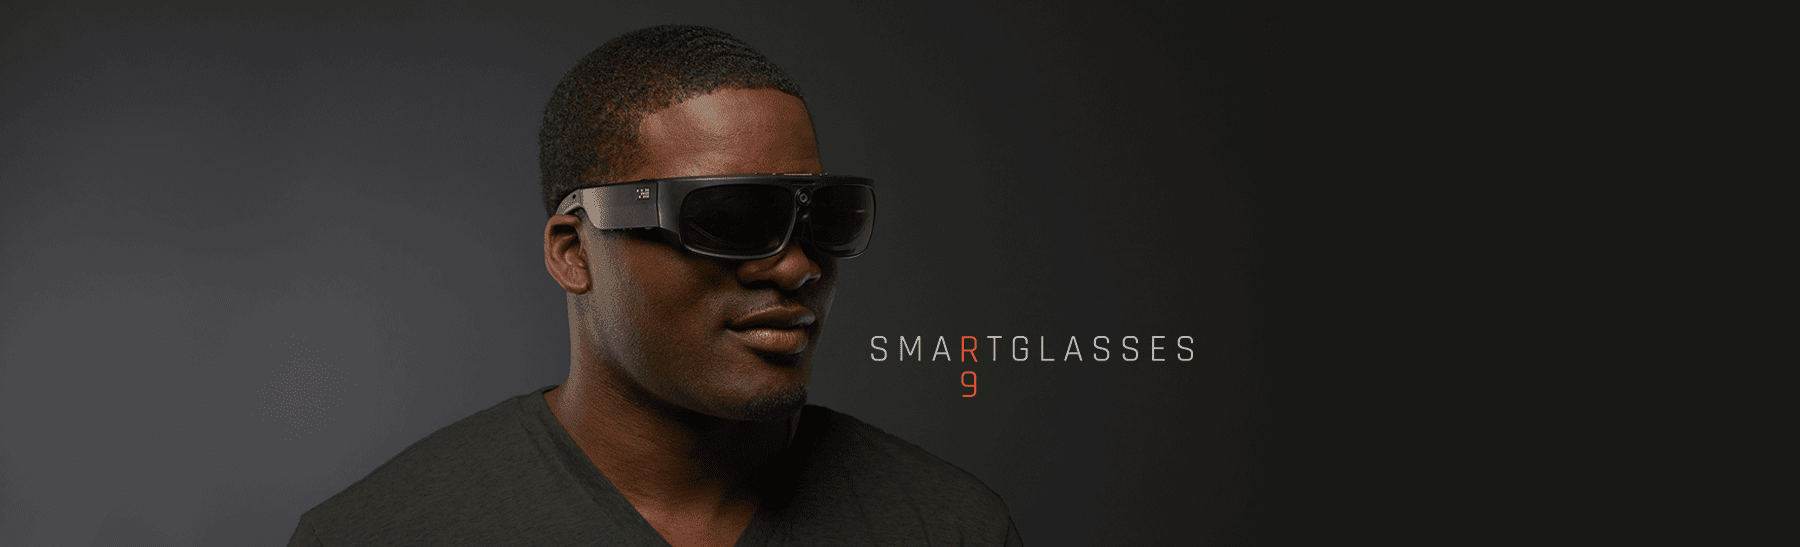 r-9 smartglasses